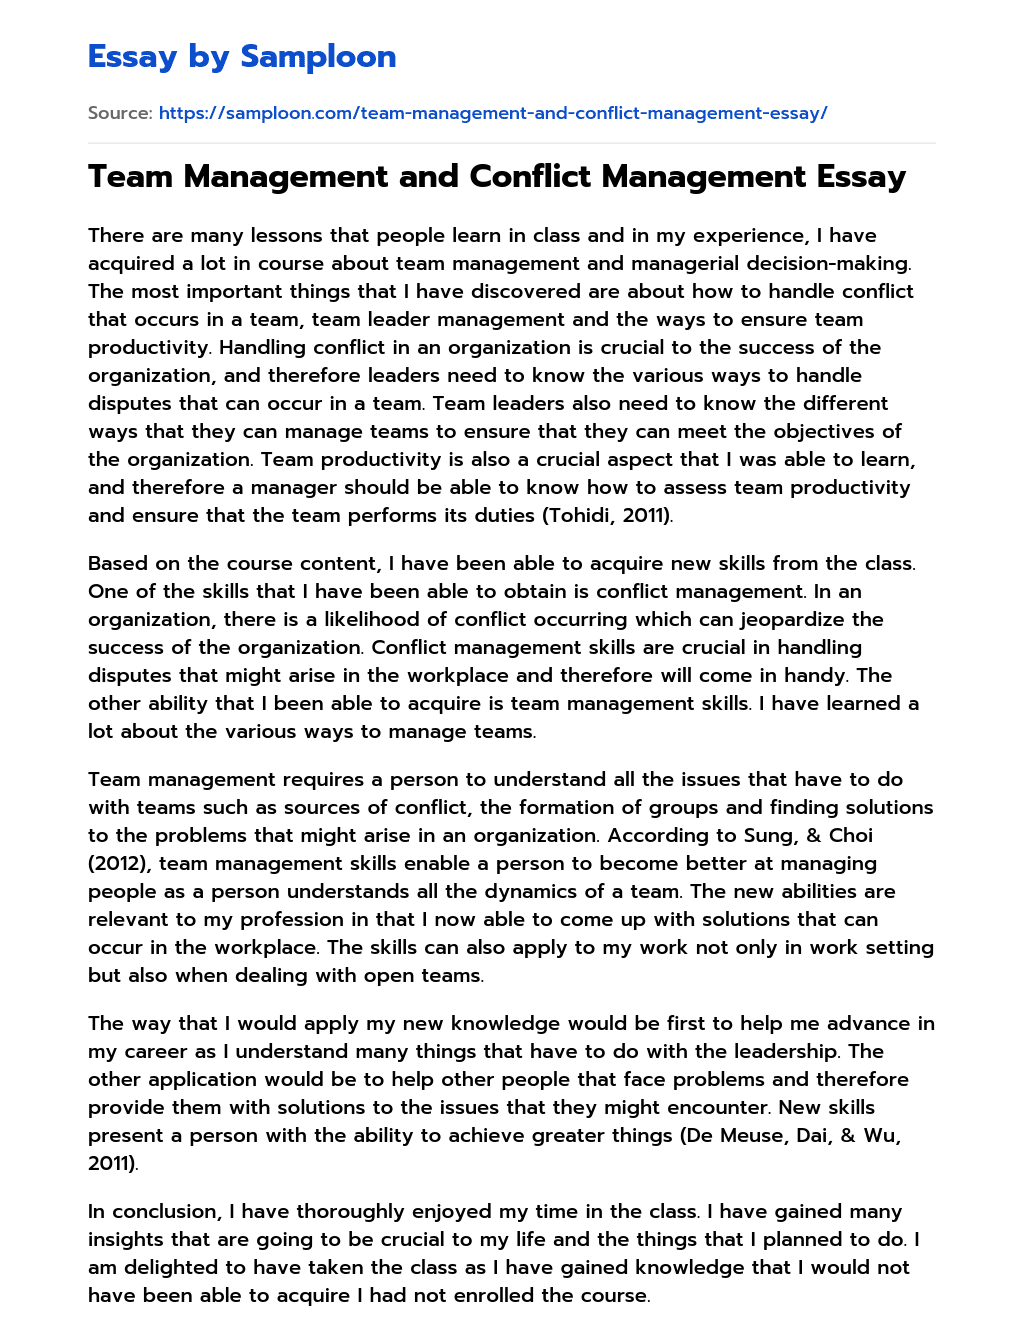 Team Management and Conflict Management Essay essay